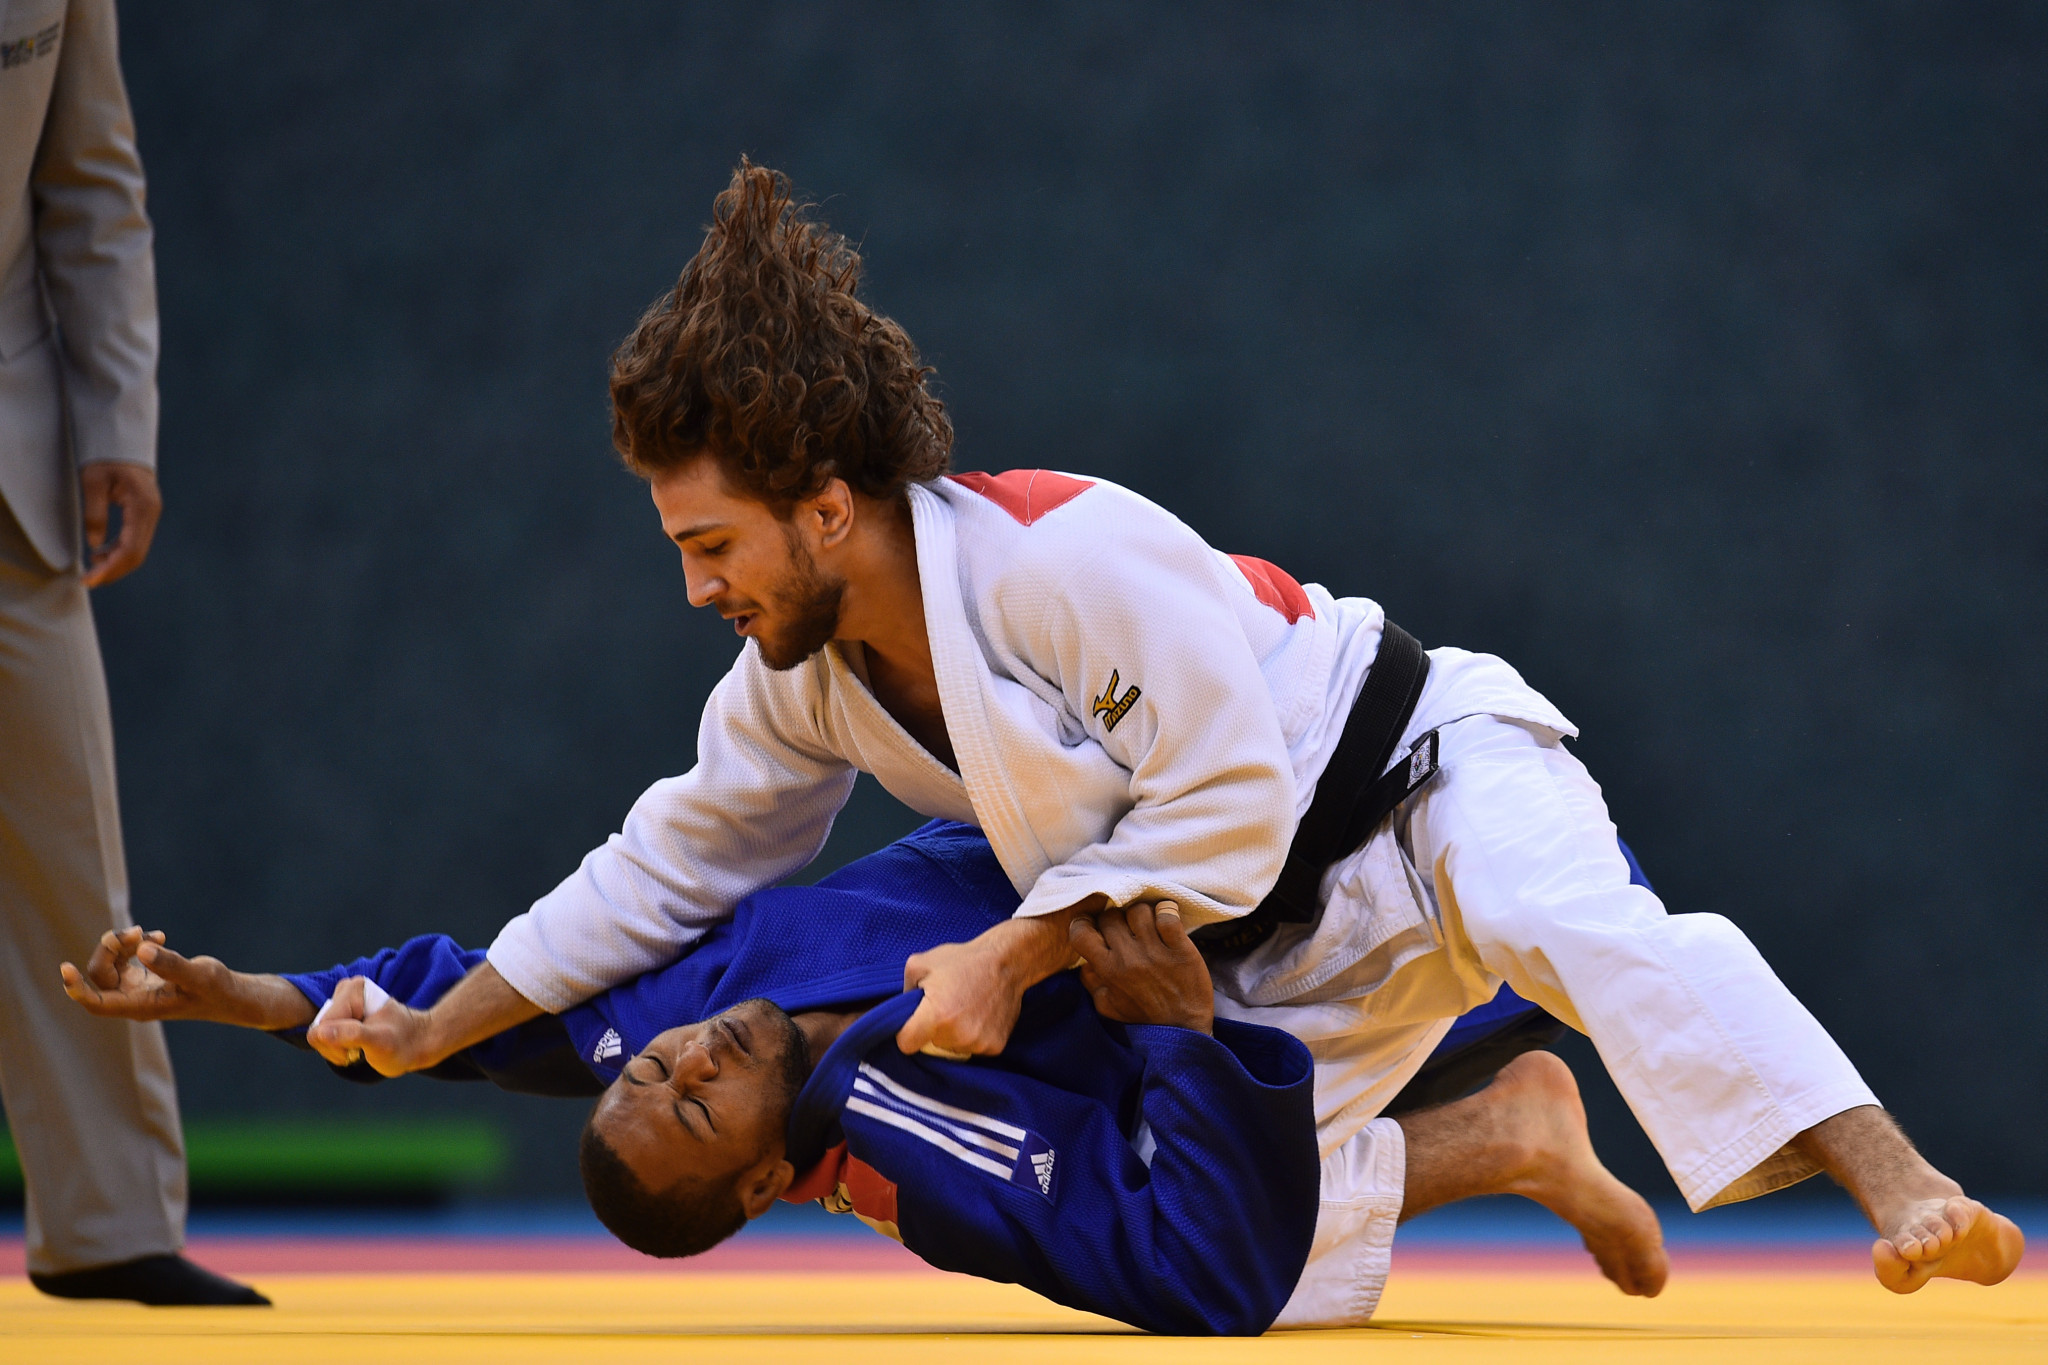 Hidayat Heydarov won gold at the IJF Baku Grand Slam ©Getty Images